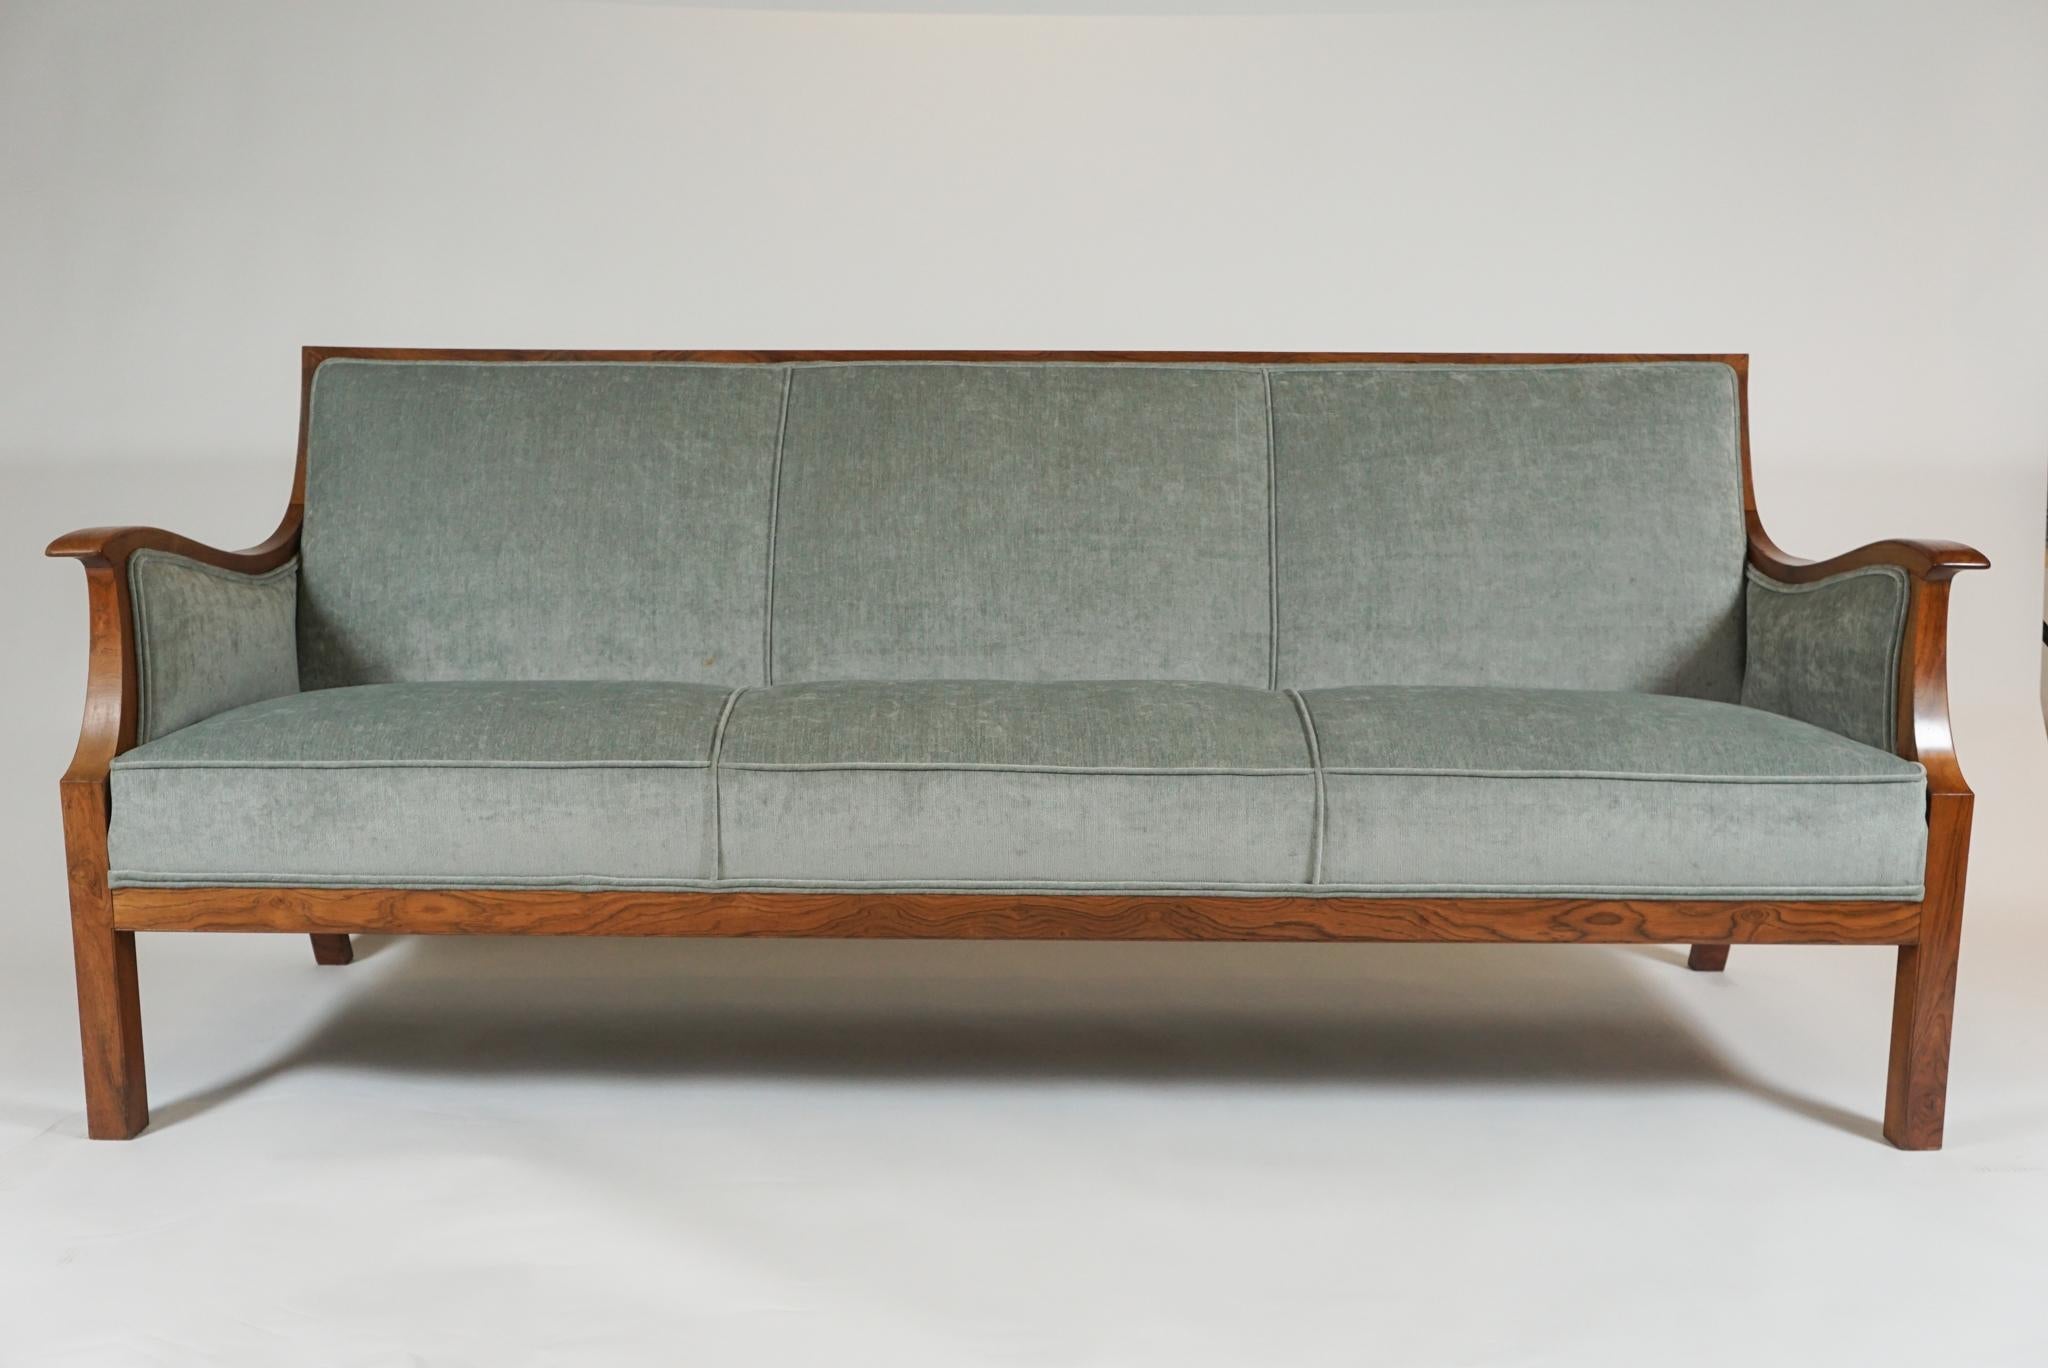 Elegant rosewood open arm sofa by Danish modern designer, Frits Henningsen from 1960s, newly upholstered in a pale blue
velveteen fabric.